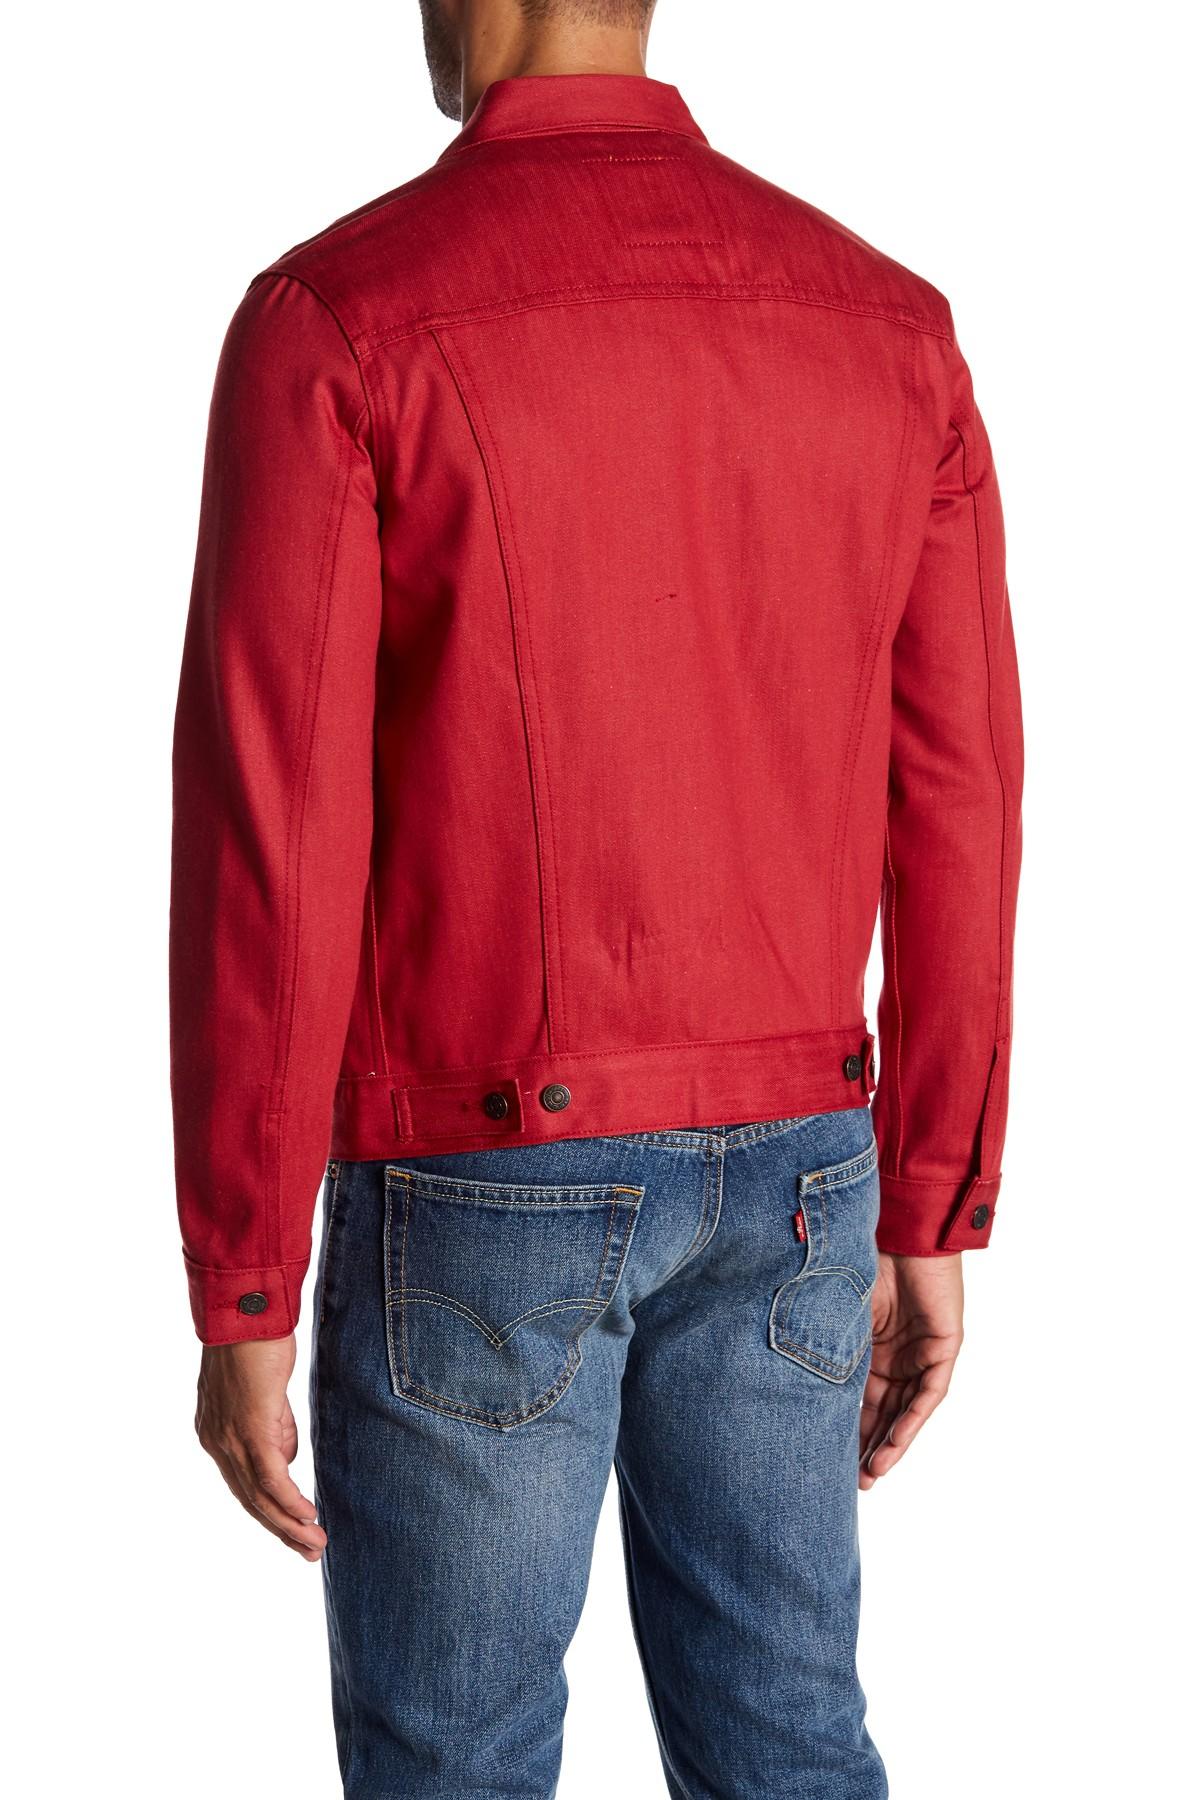 levi's red trucker jacket